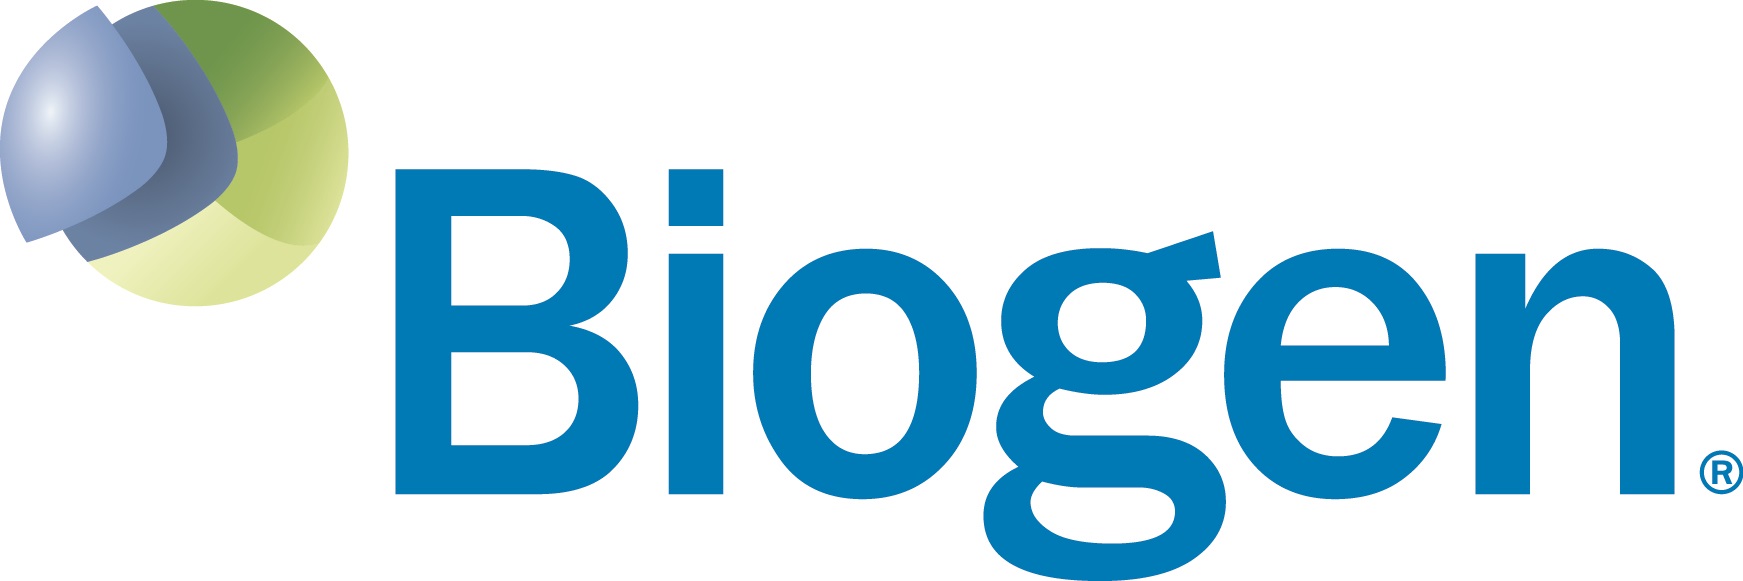 Biogen_Logo_Standard-cmyk_R.jpg